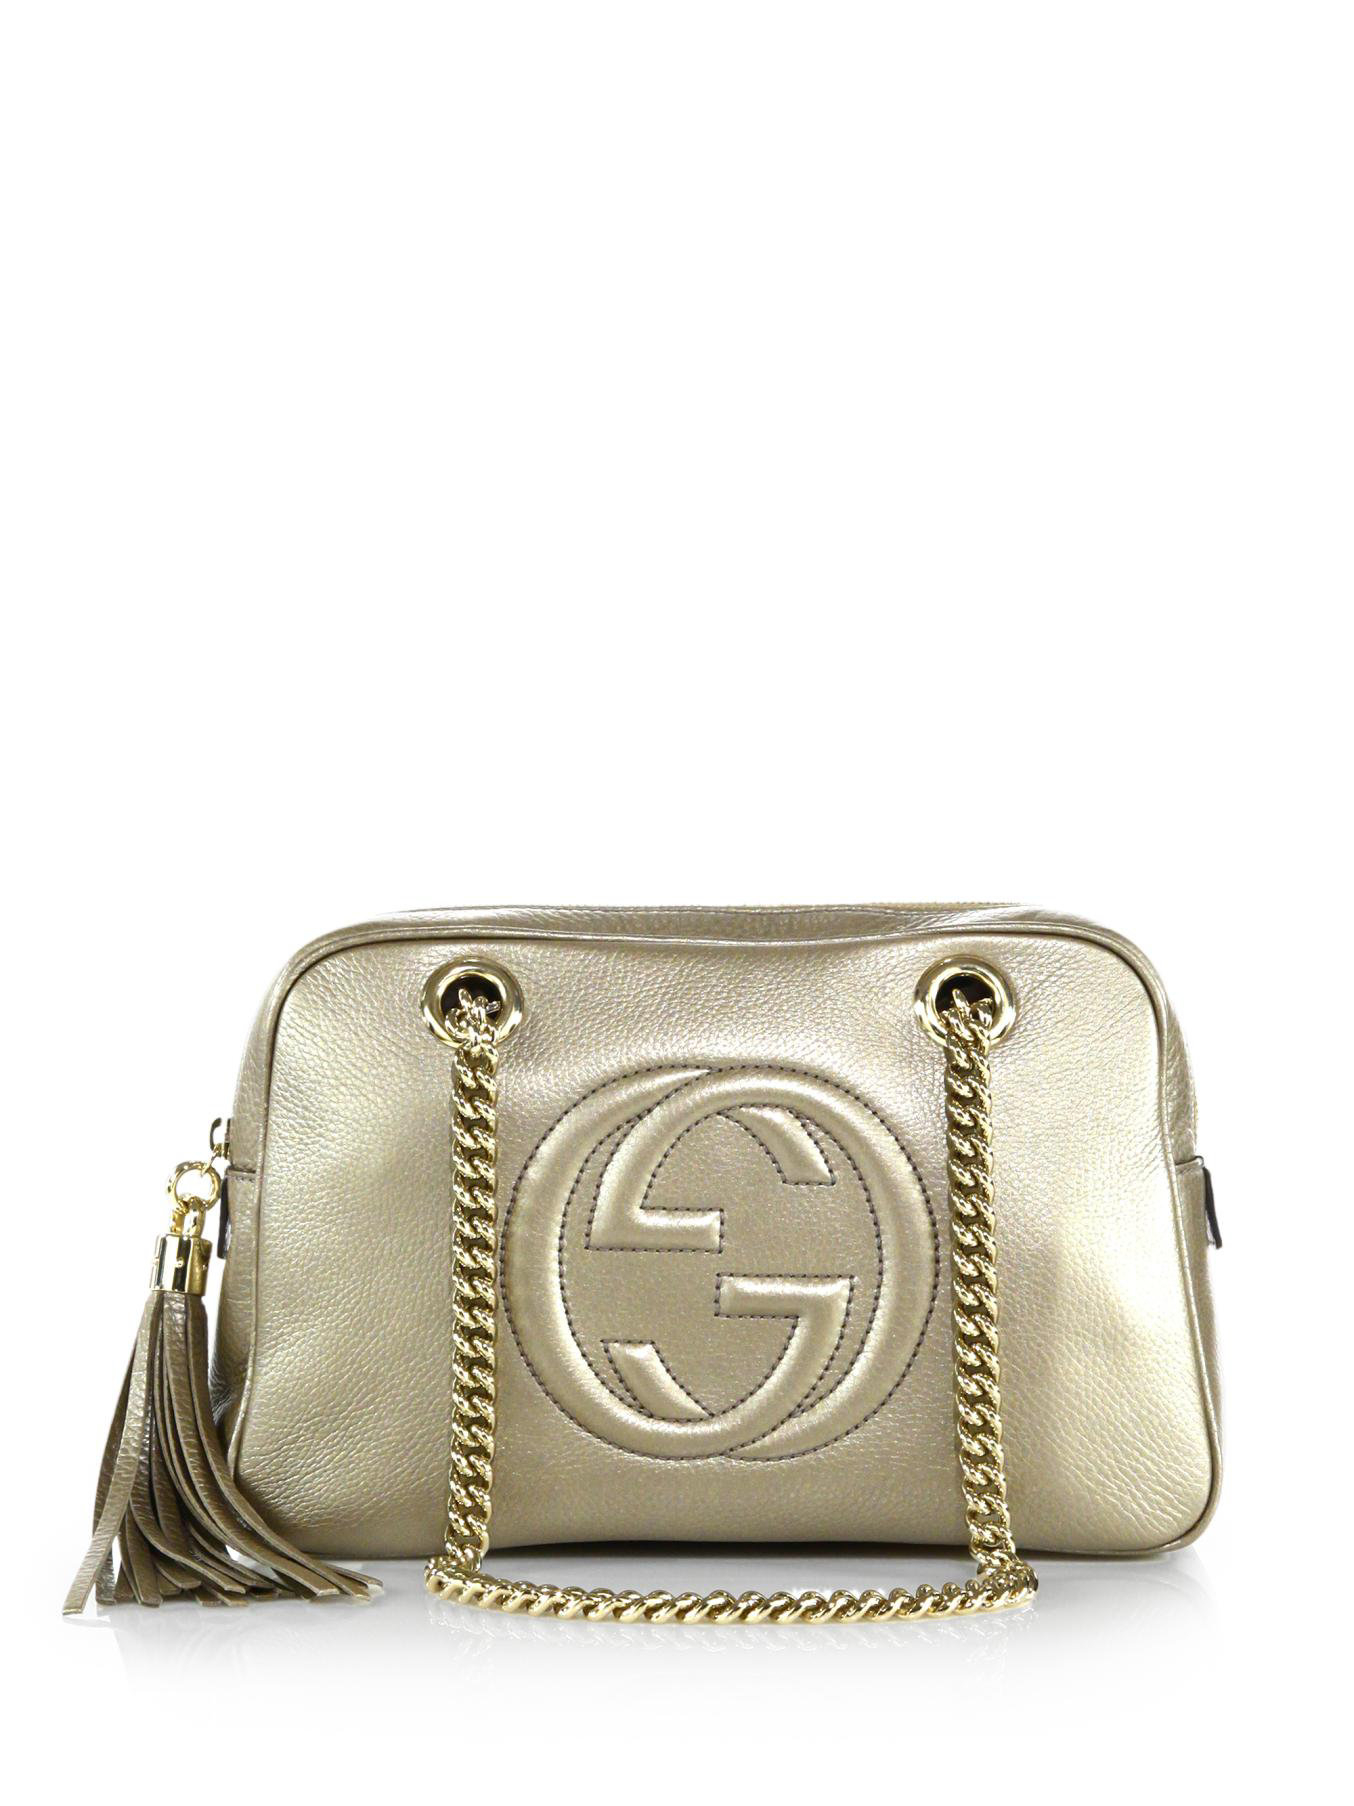 Gucci Soho Metallic Leather Chain Shoulder Bag in Metallic | Lyst